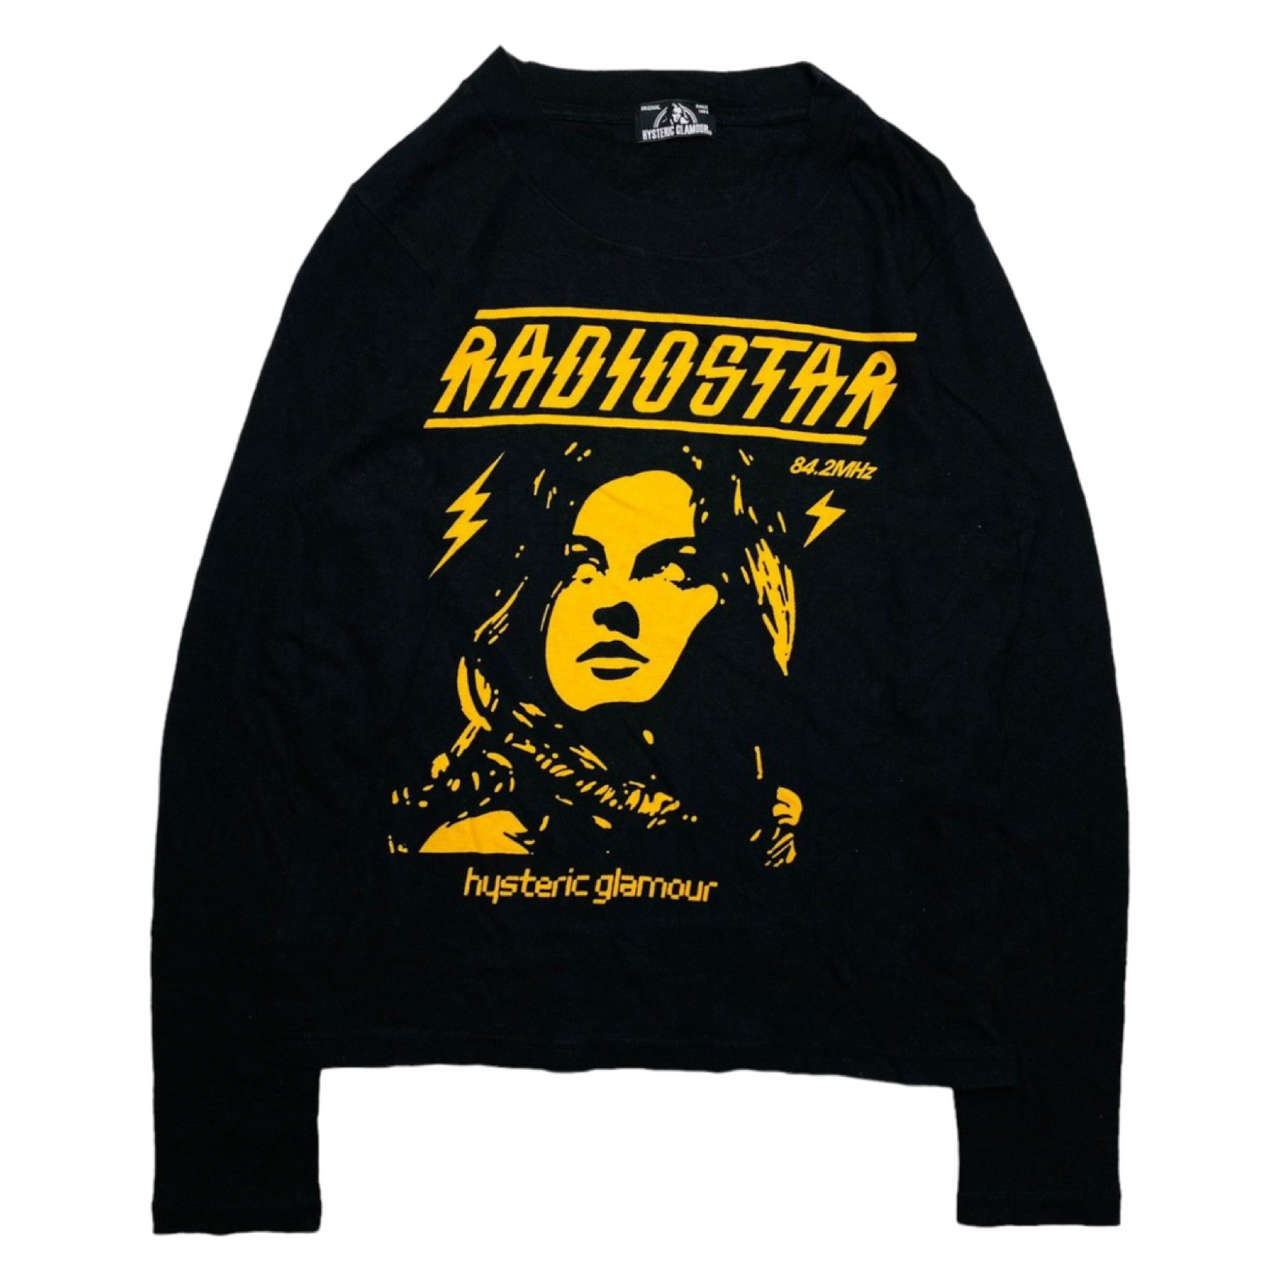 2000s Hysteric Glamour Radiostar Printed Girl Face Sweatshirt